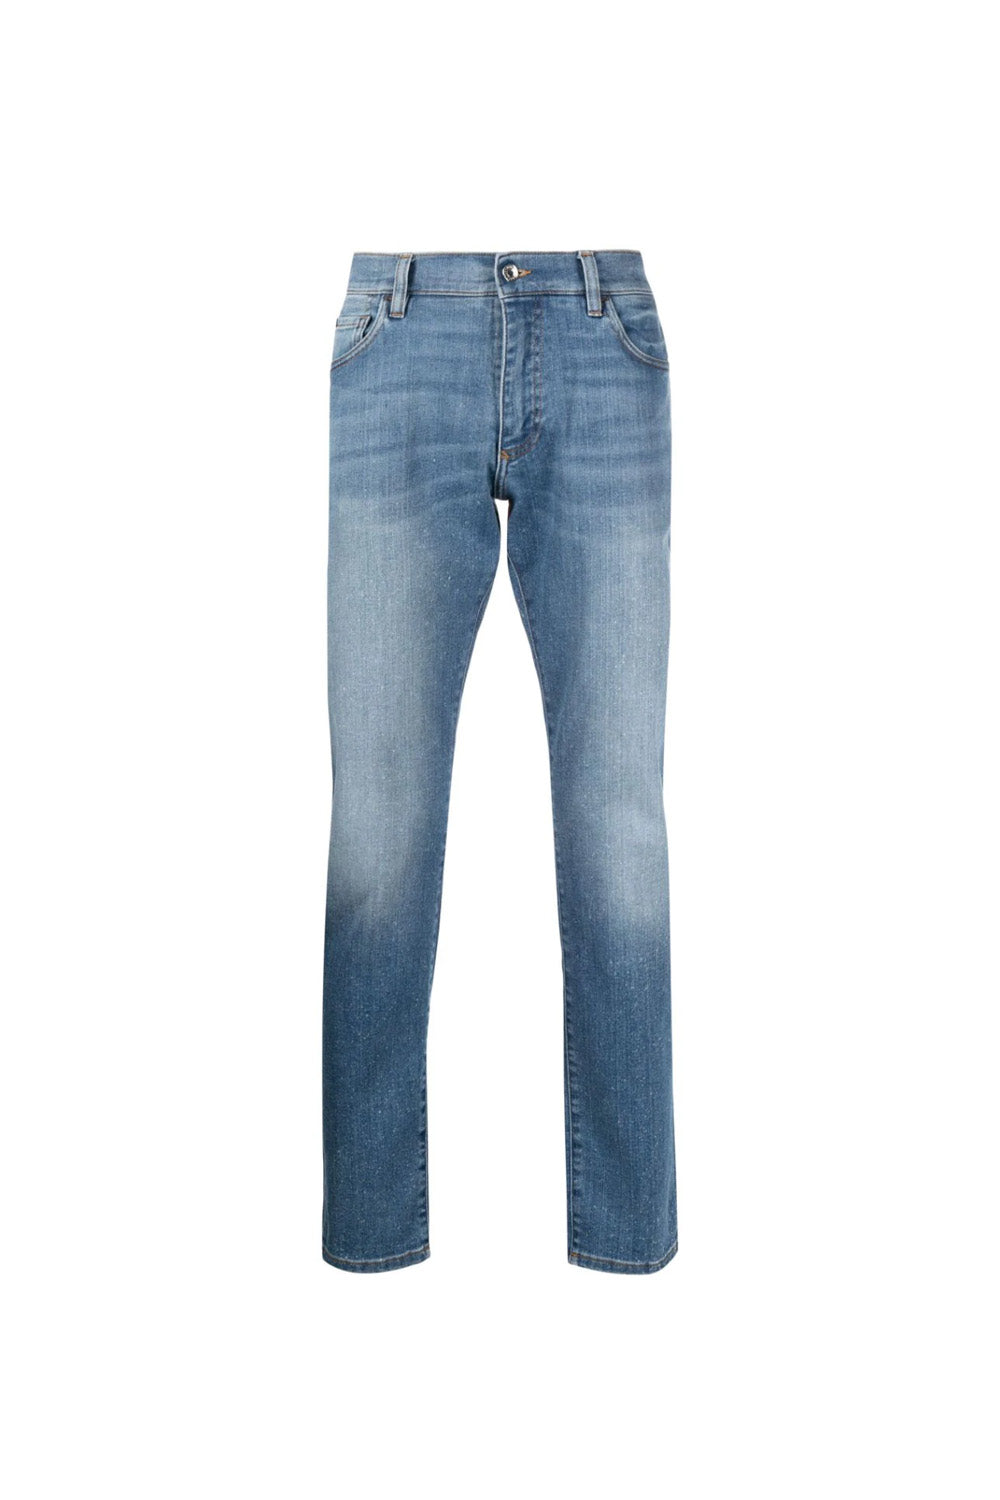 Dolce & Gabbana washed denim slim-cut jeans